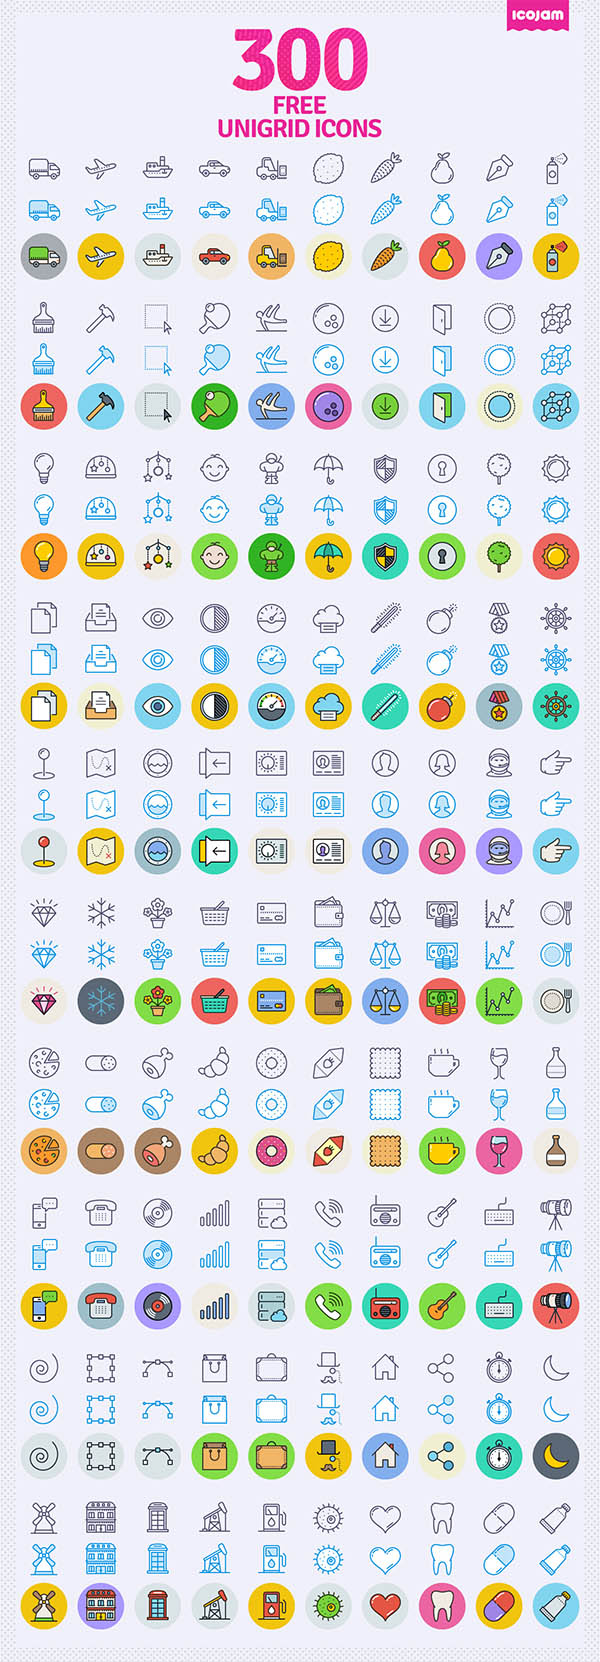 Free 300 Unigrid Icons PSD